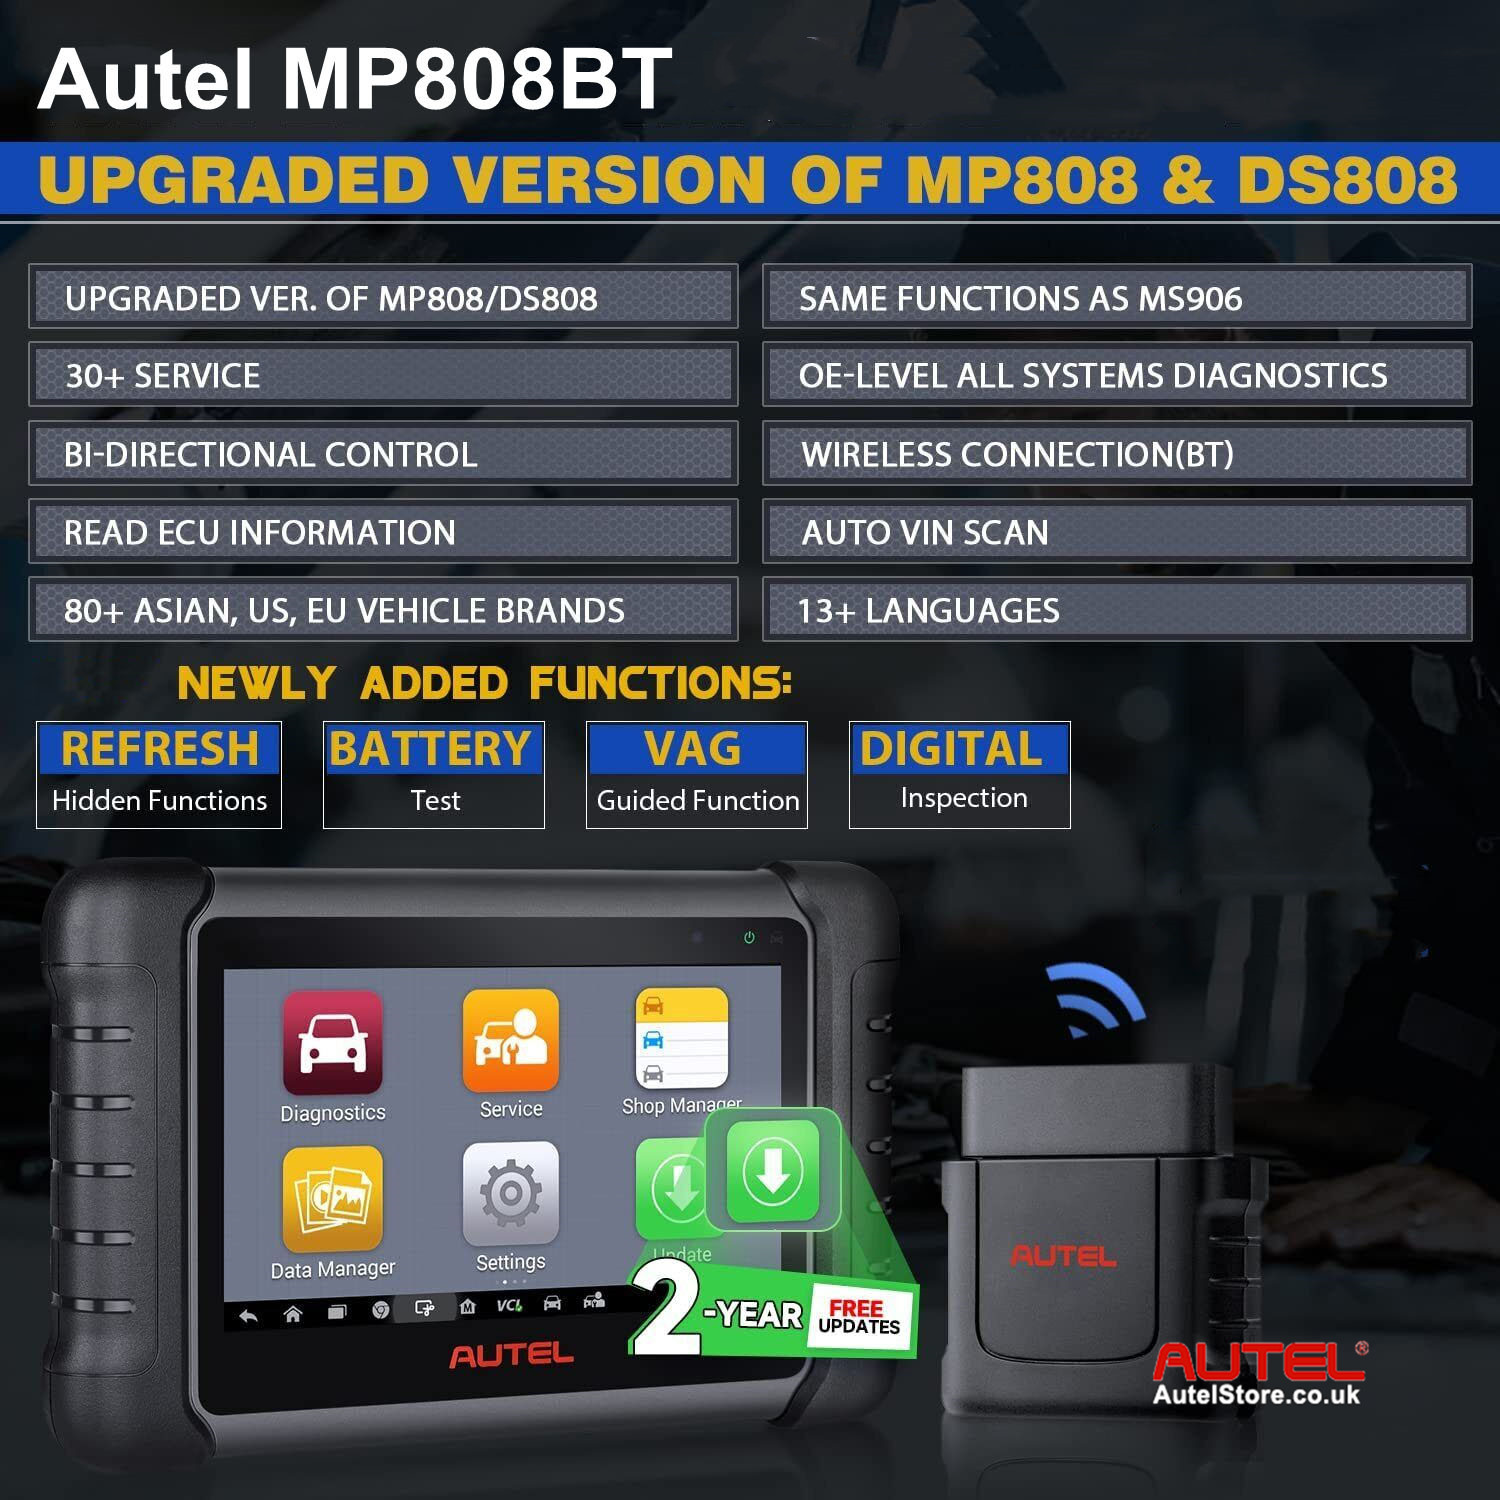 Autel MaxiPRO MP808BT